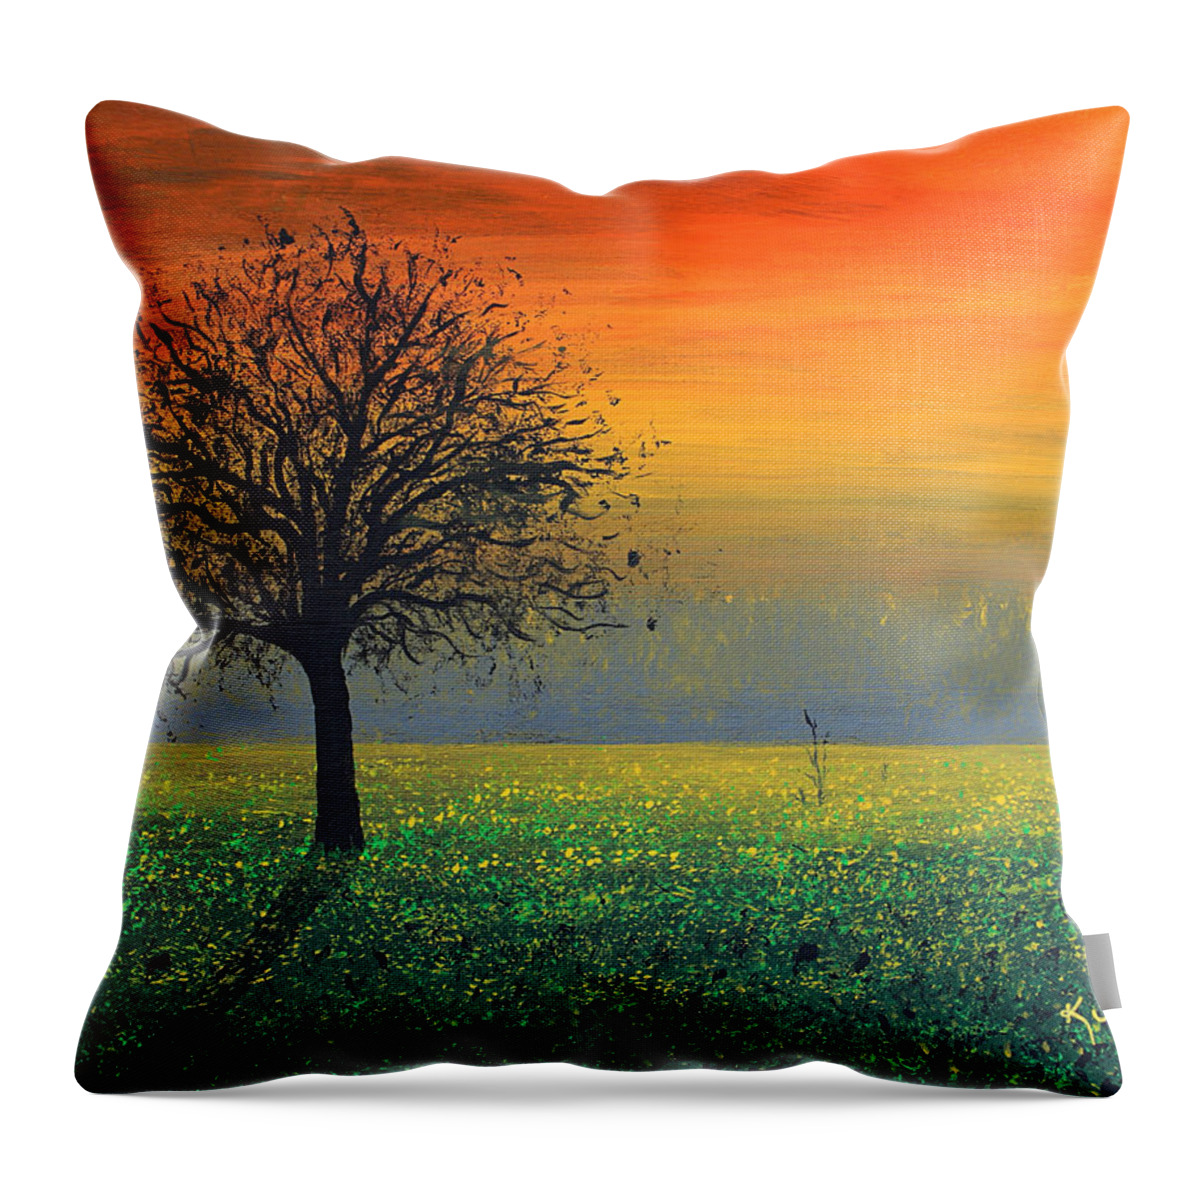 Sprinkles Of The Evening Sun Throw Pillow featuring the painting Sprinkles of the Evening Sun by Kume Bryant